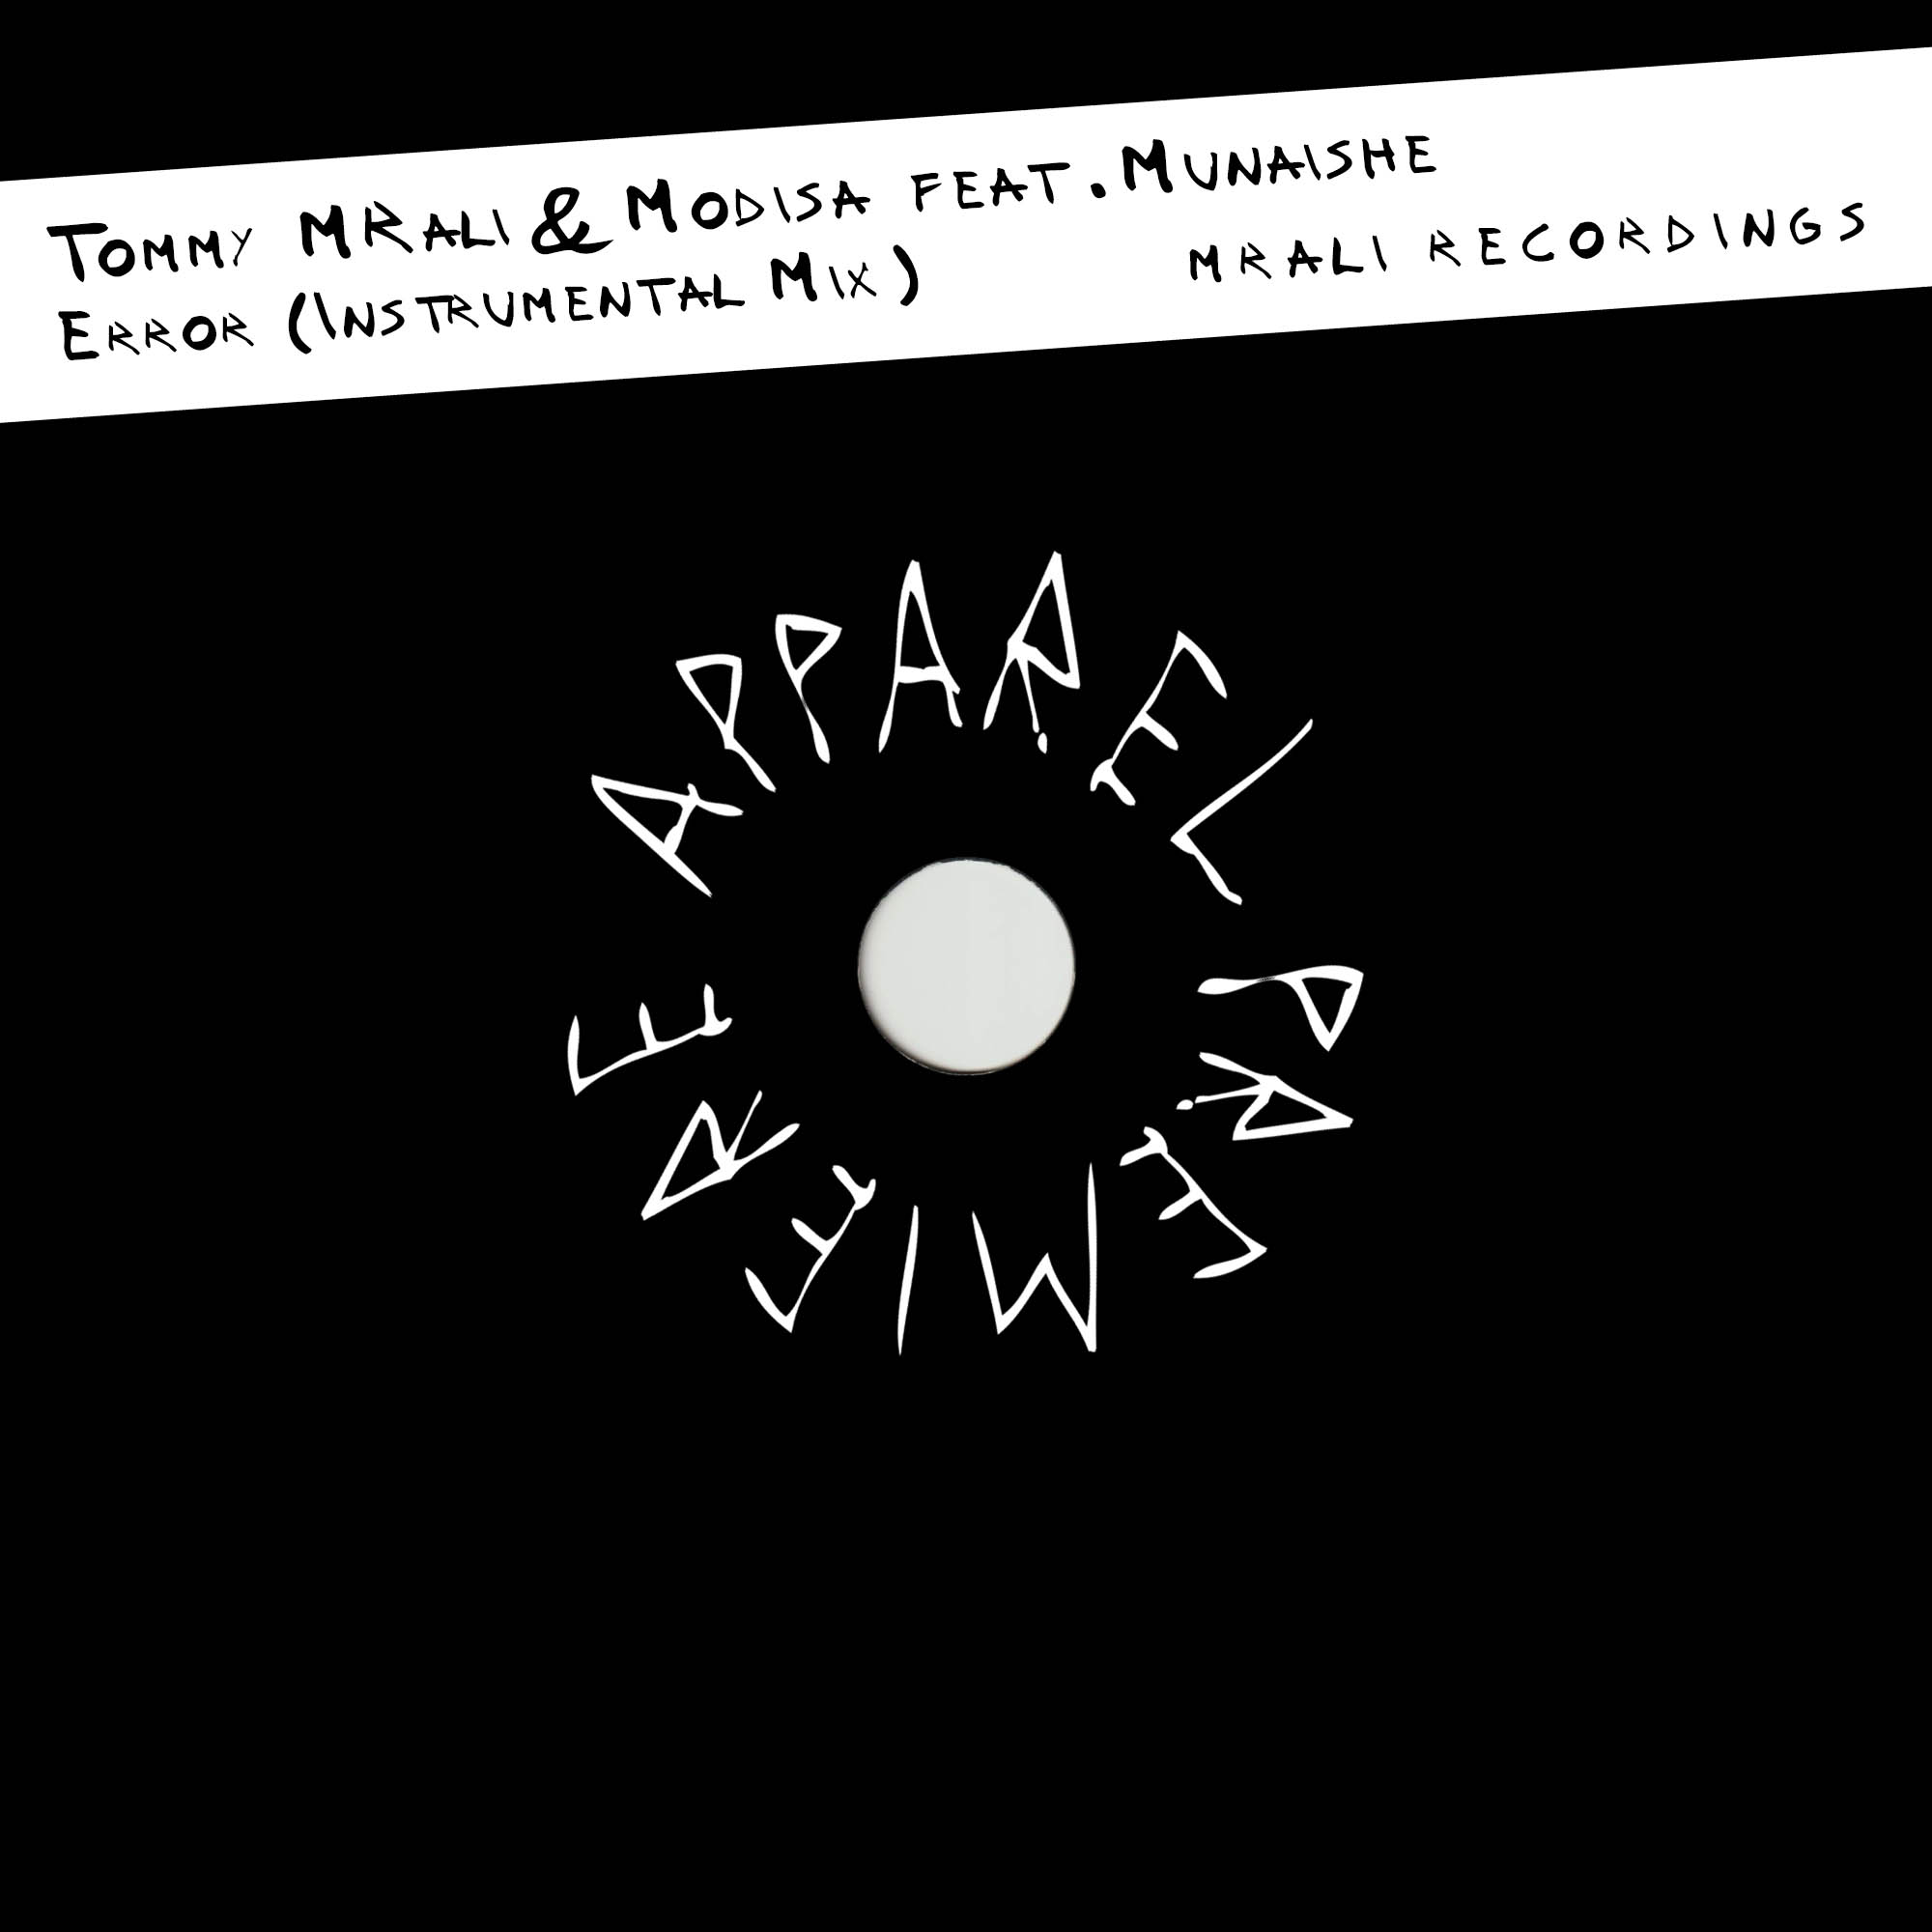 APPAREL PREMIERE Tommy MRali & Modisa feat. Munaishe – Error (Instrumental Mix) [MRali Recordings]